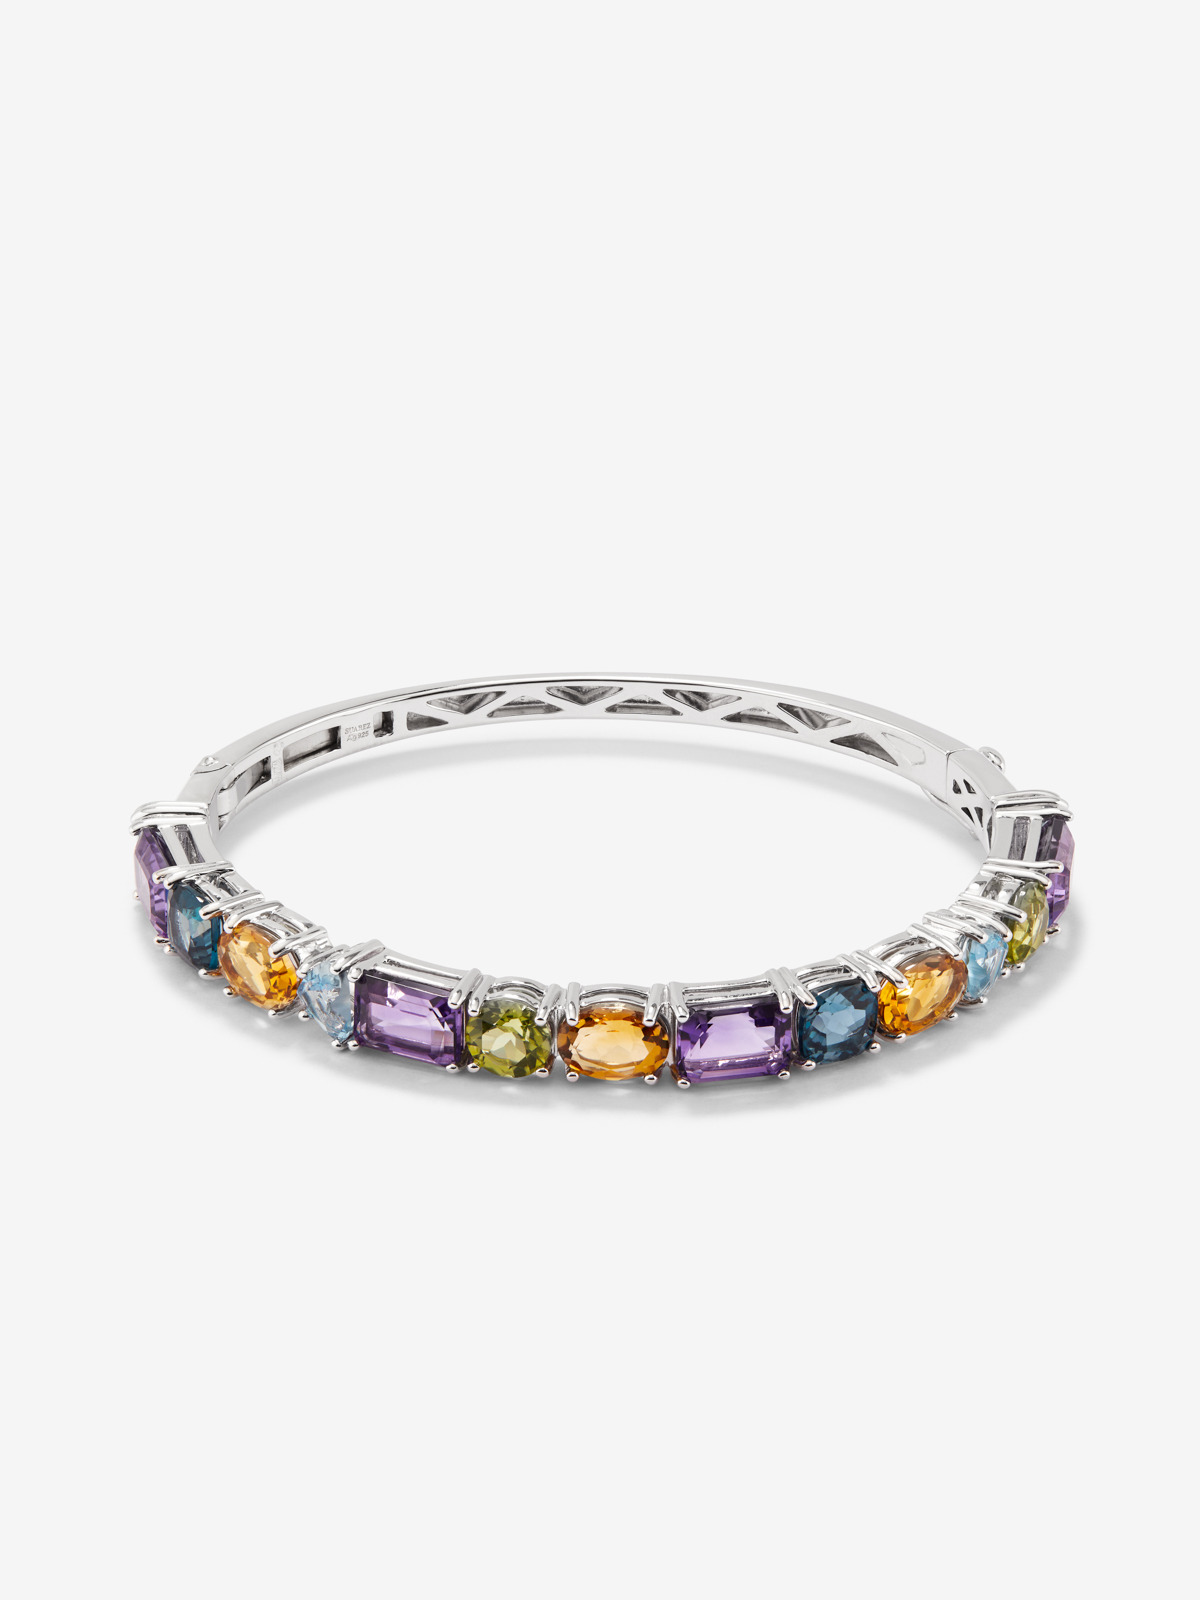 925 silver rigid bracelet with multicolored gems